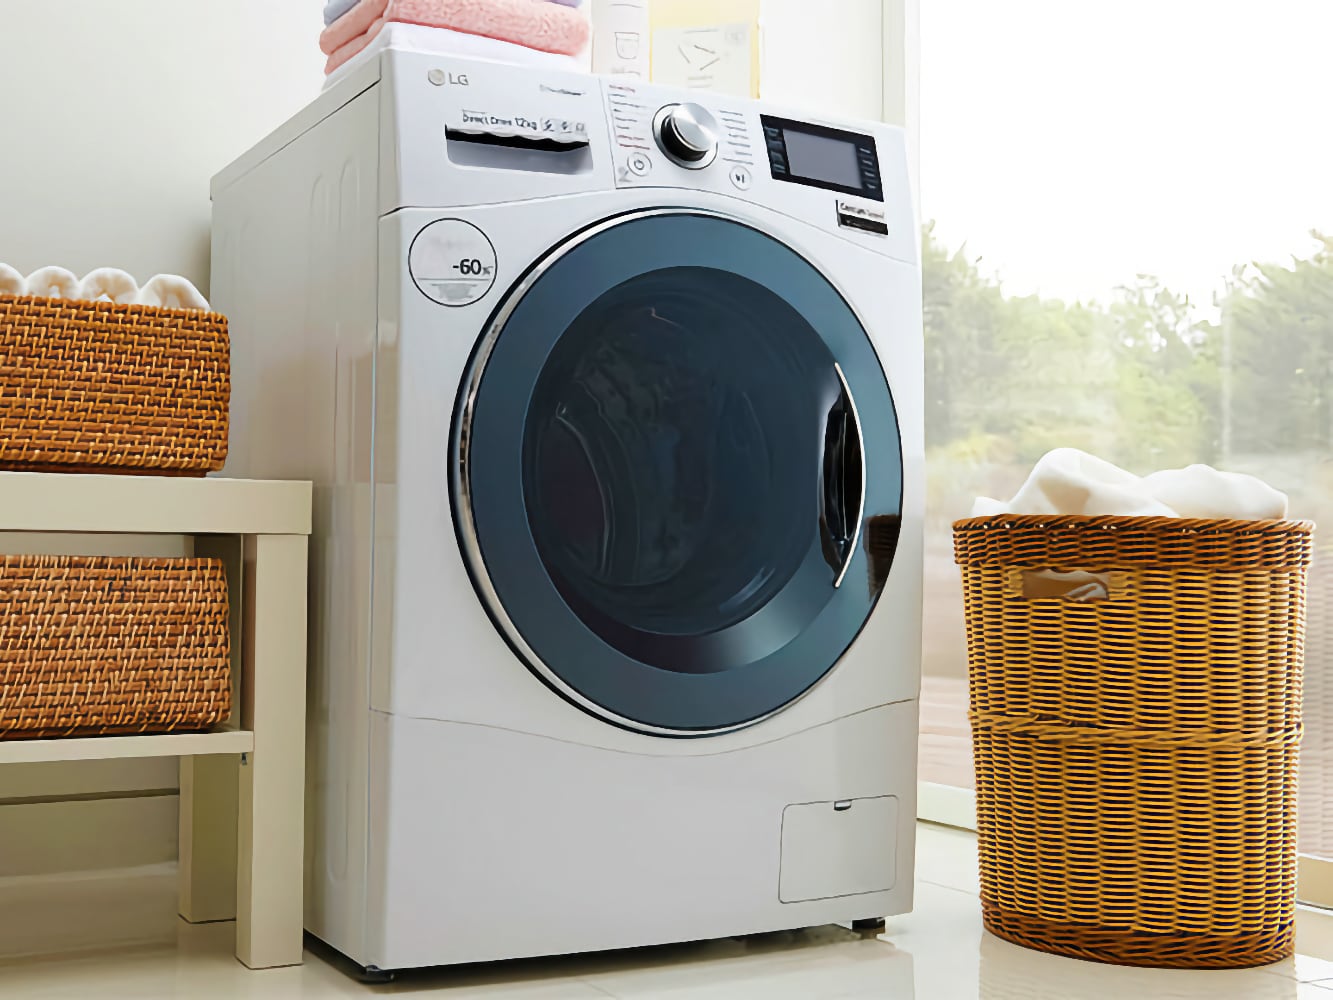 Як вибрати хорошу прально-сушильну машину?